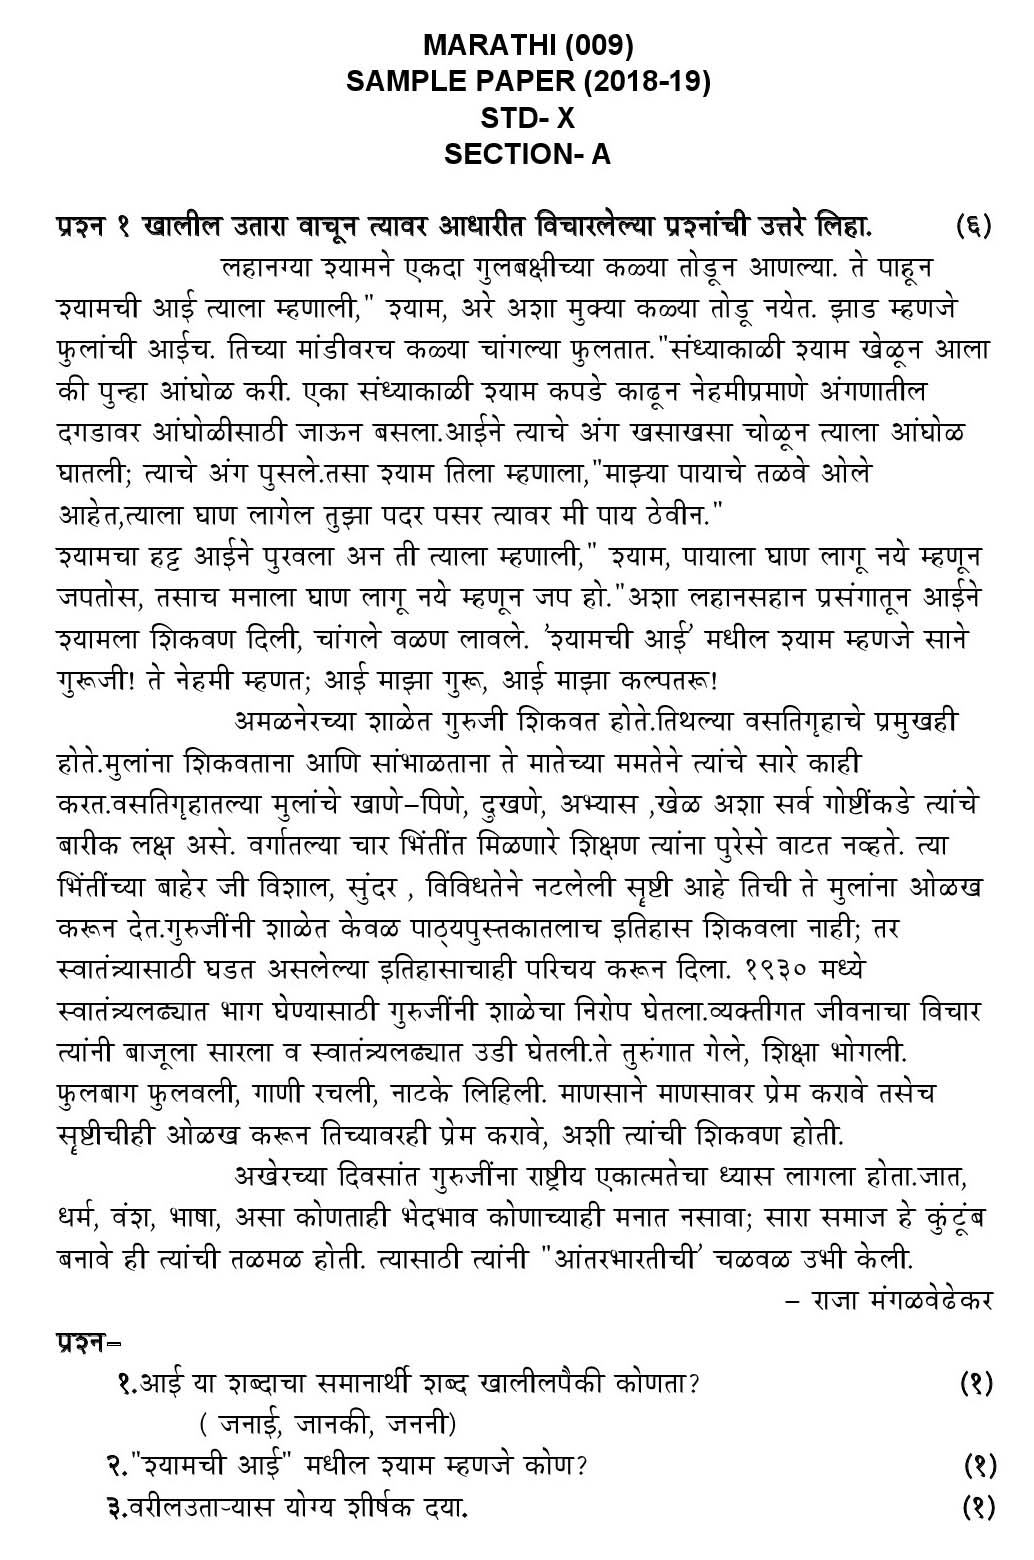 Marathi CBSE Class X Sample Question Paper 2018-19 - Image 1